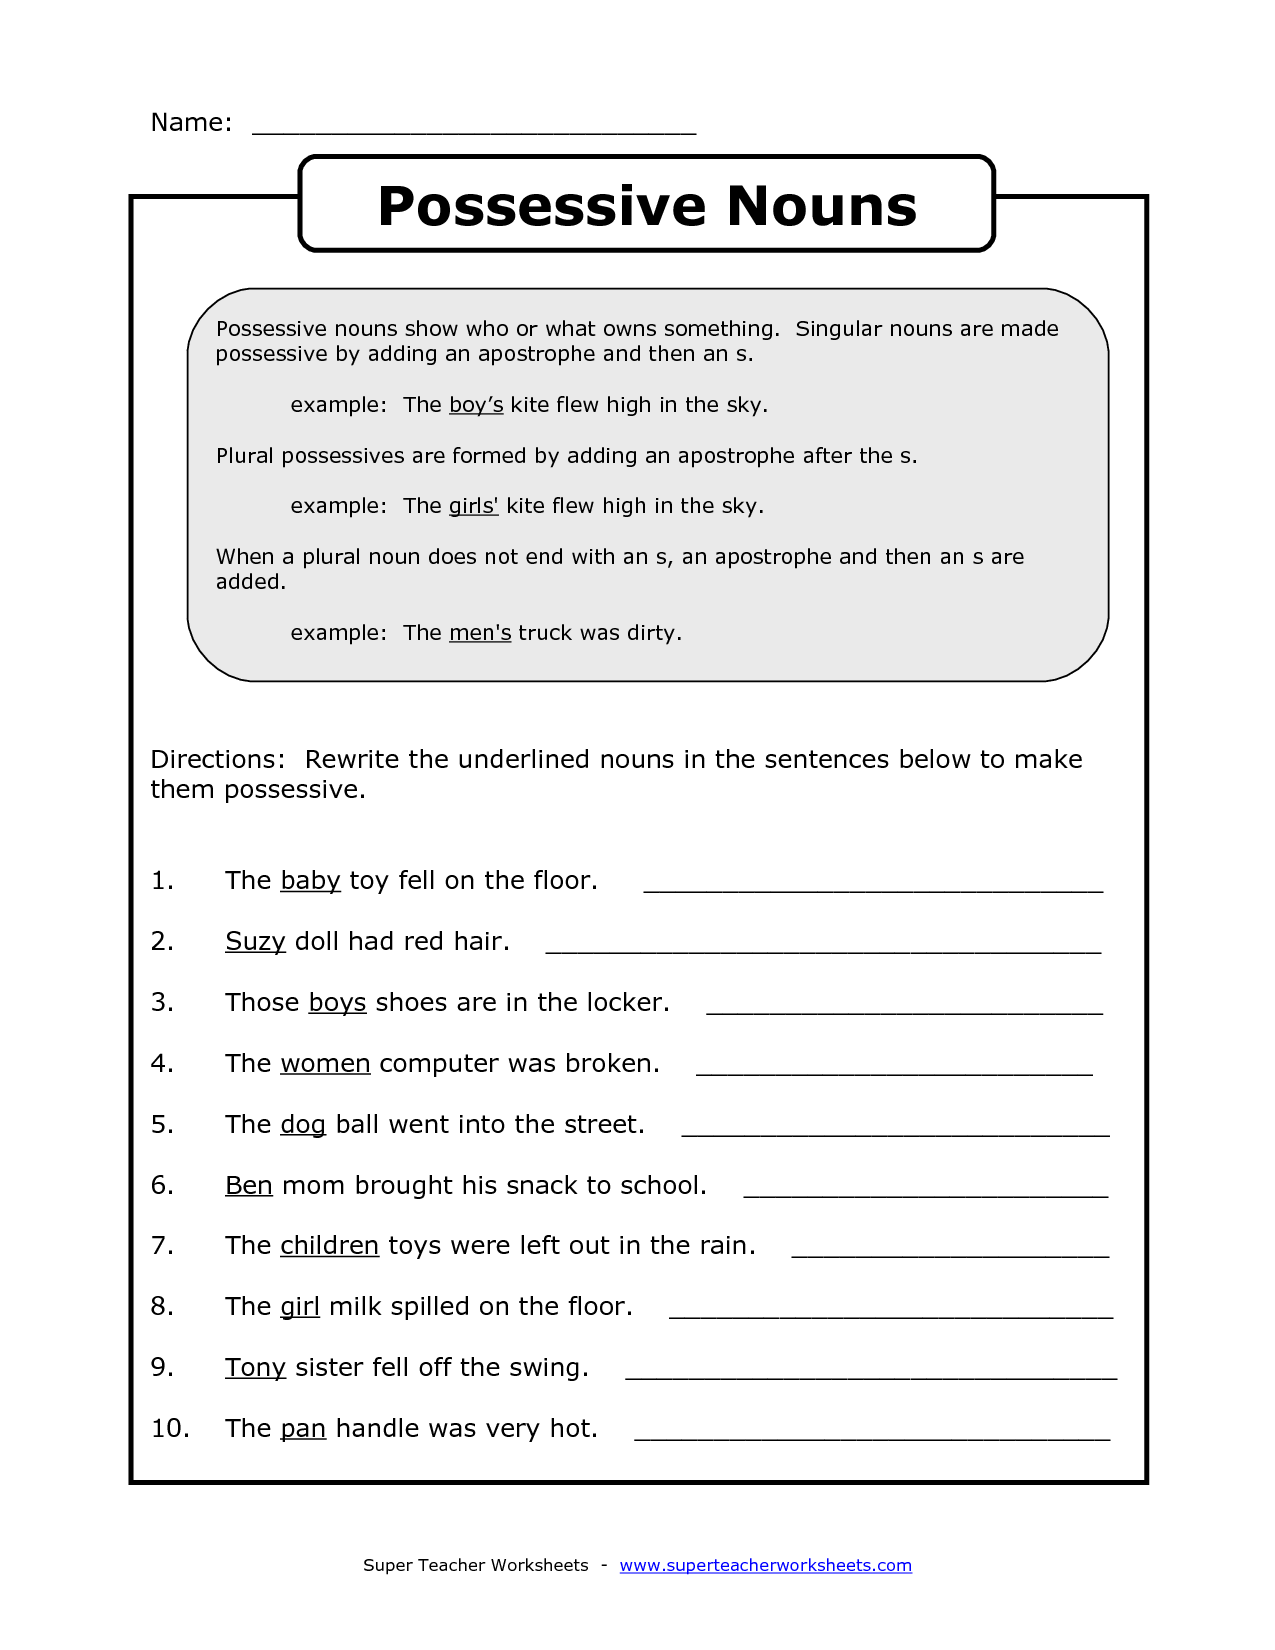 nouns-common-proper-possessive-common-core-practice-sheets-l-1-1-b-common-core-language